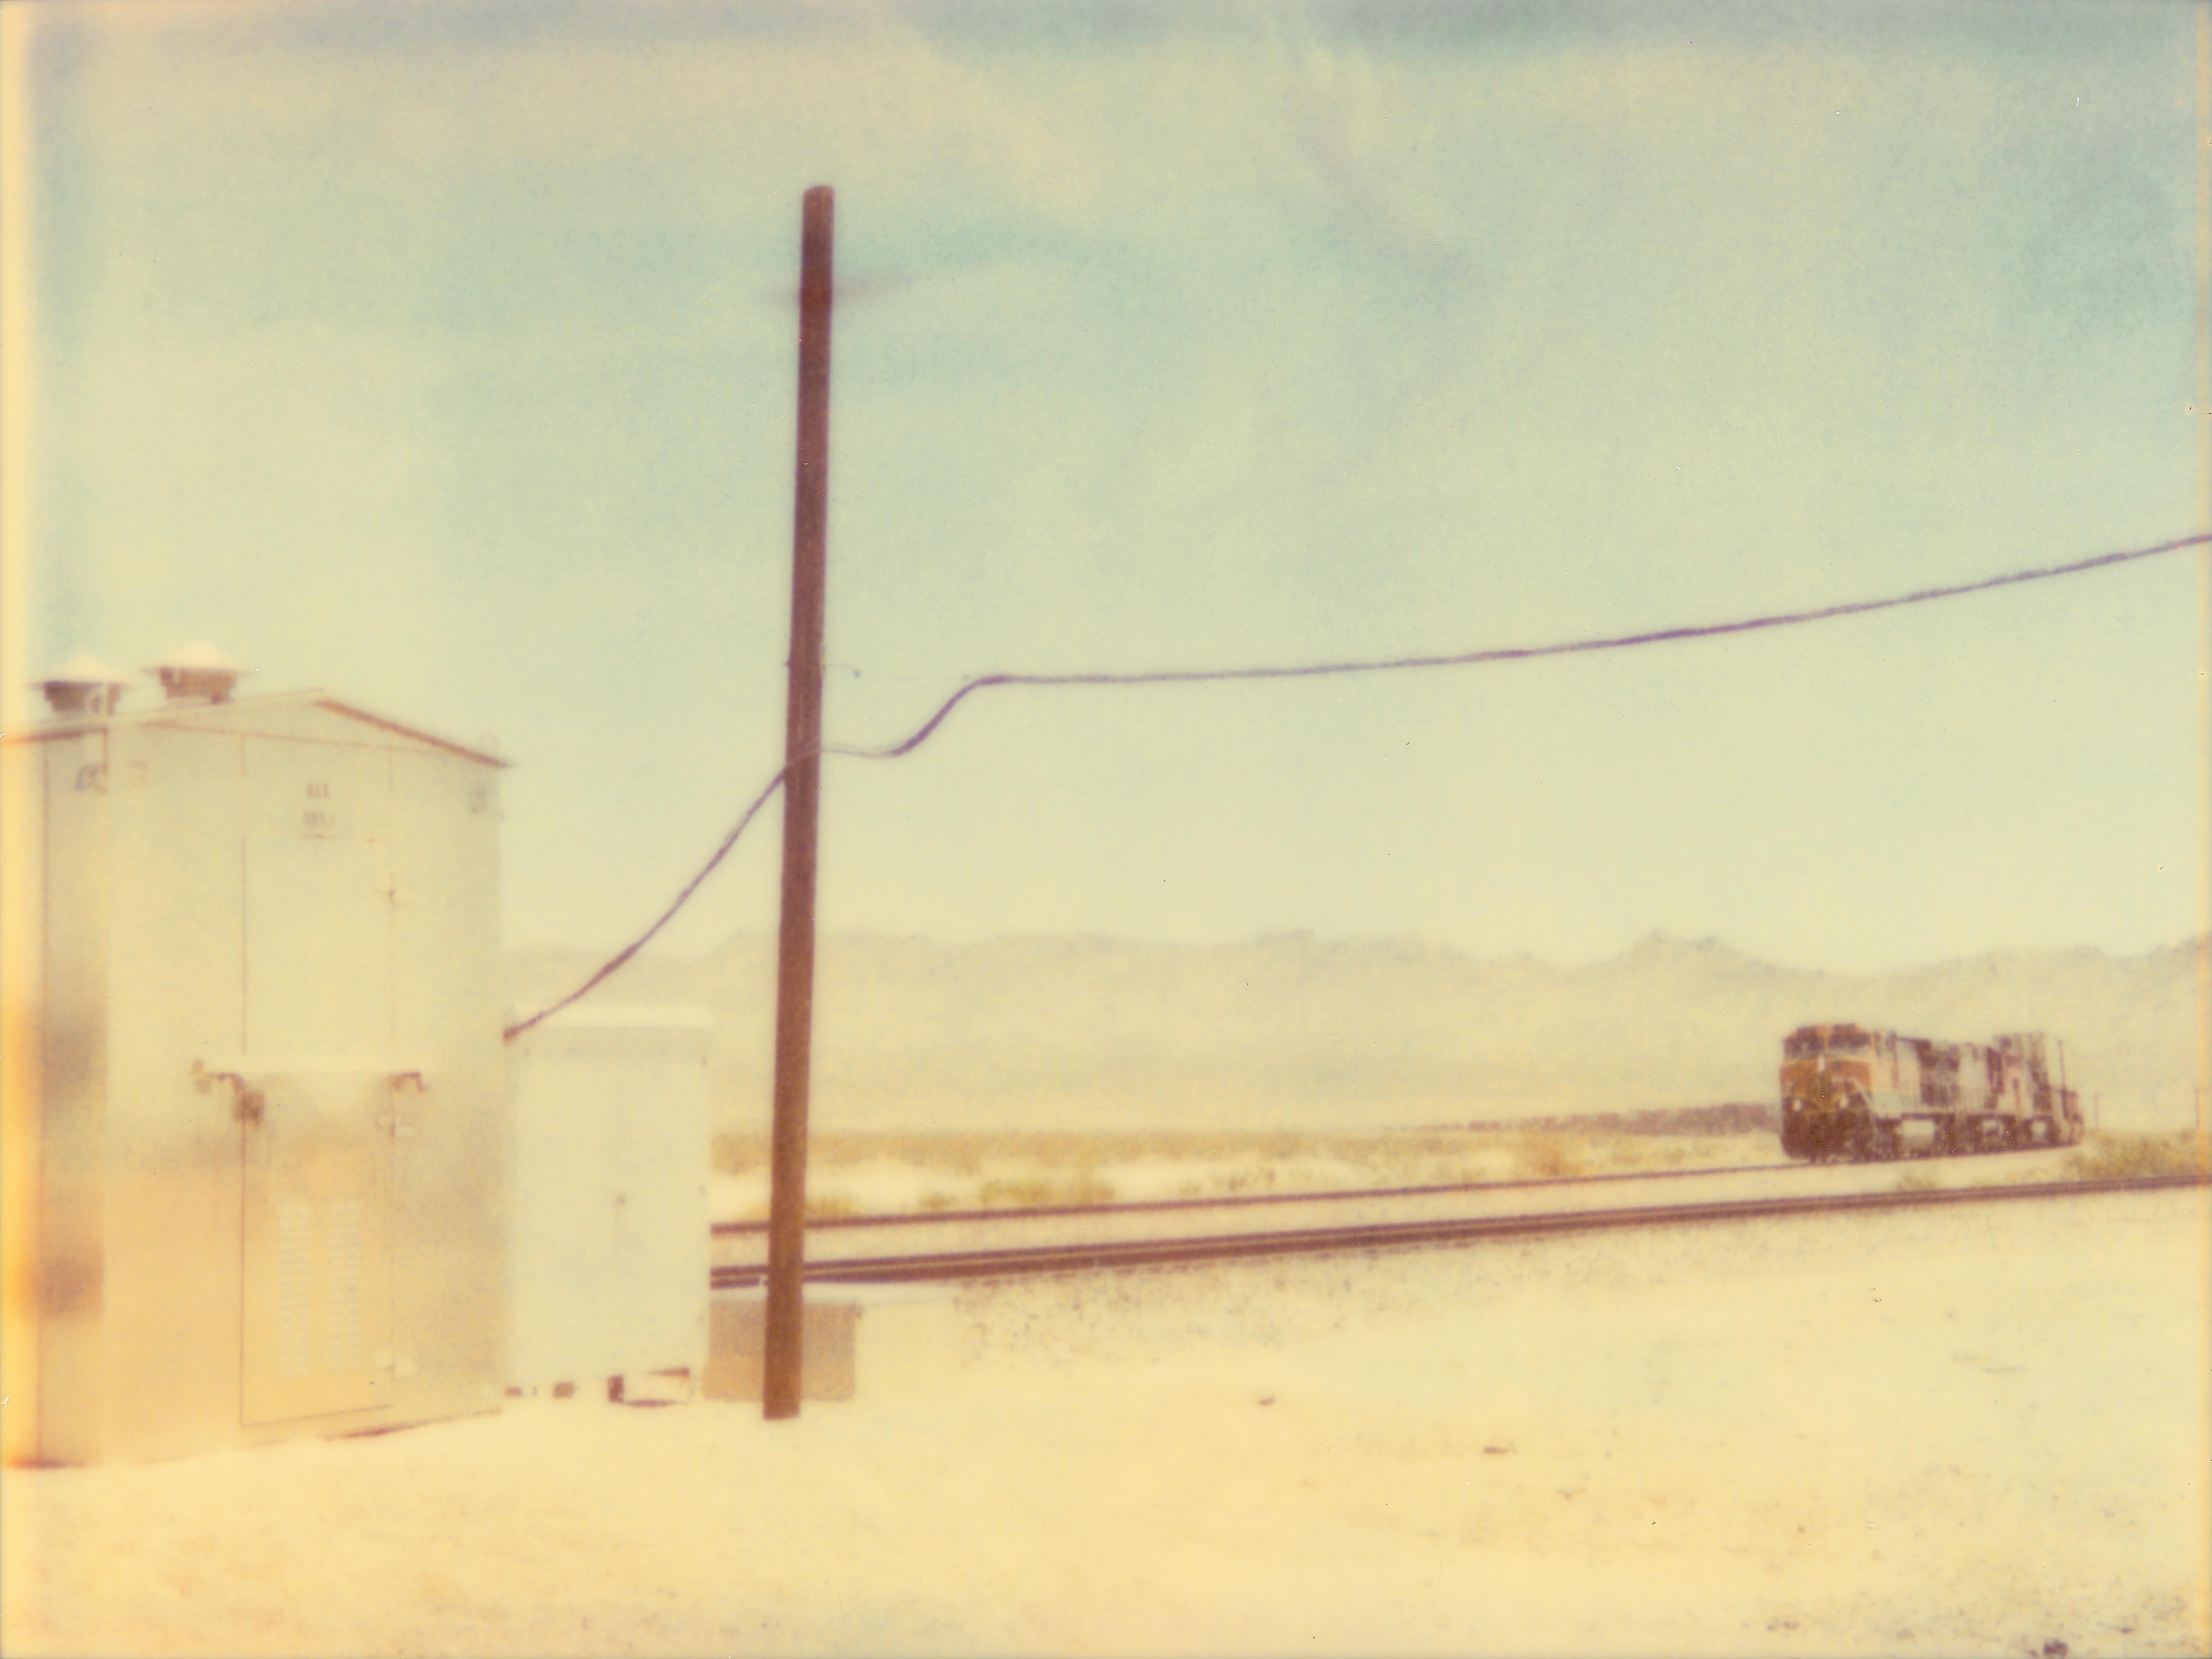 Stefanie Schneider Landscape Photograph - Approaching Train (Wastelands) - Contemporary, Landscape, Polaroid, analog